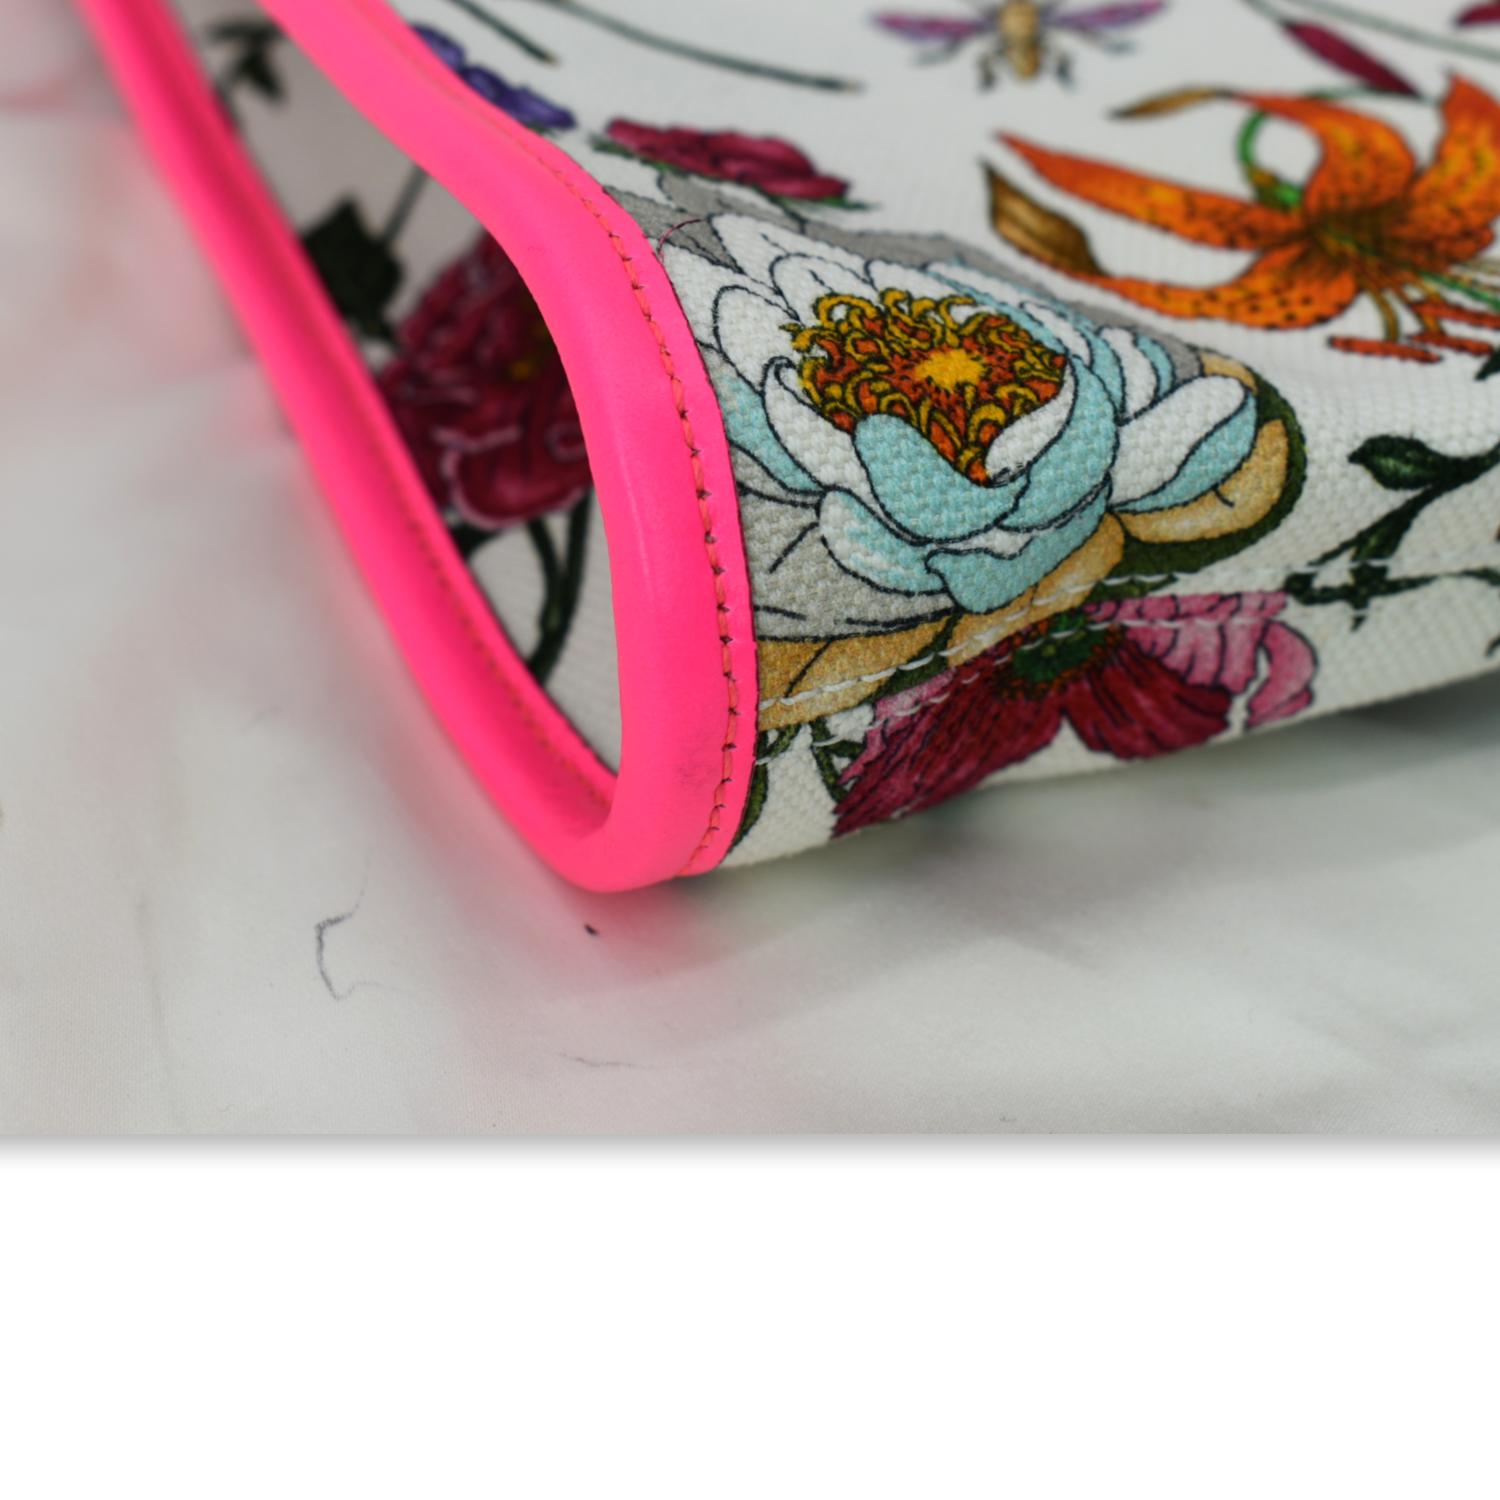 Gucci Floral-print Logo Tote Bag in White –